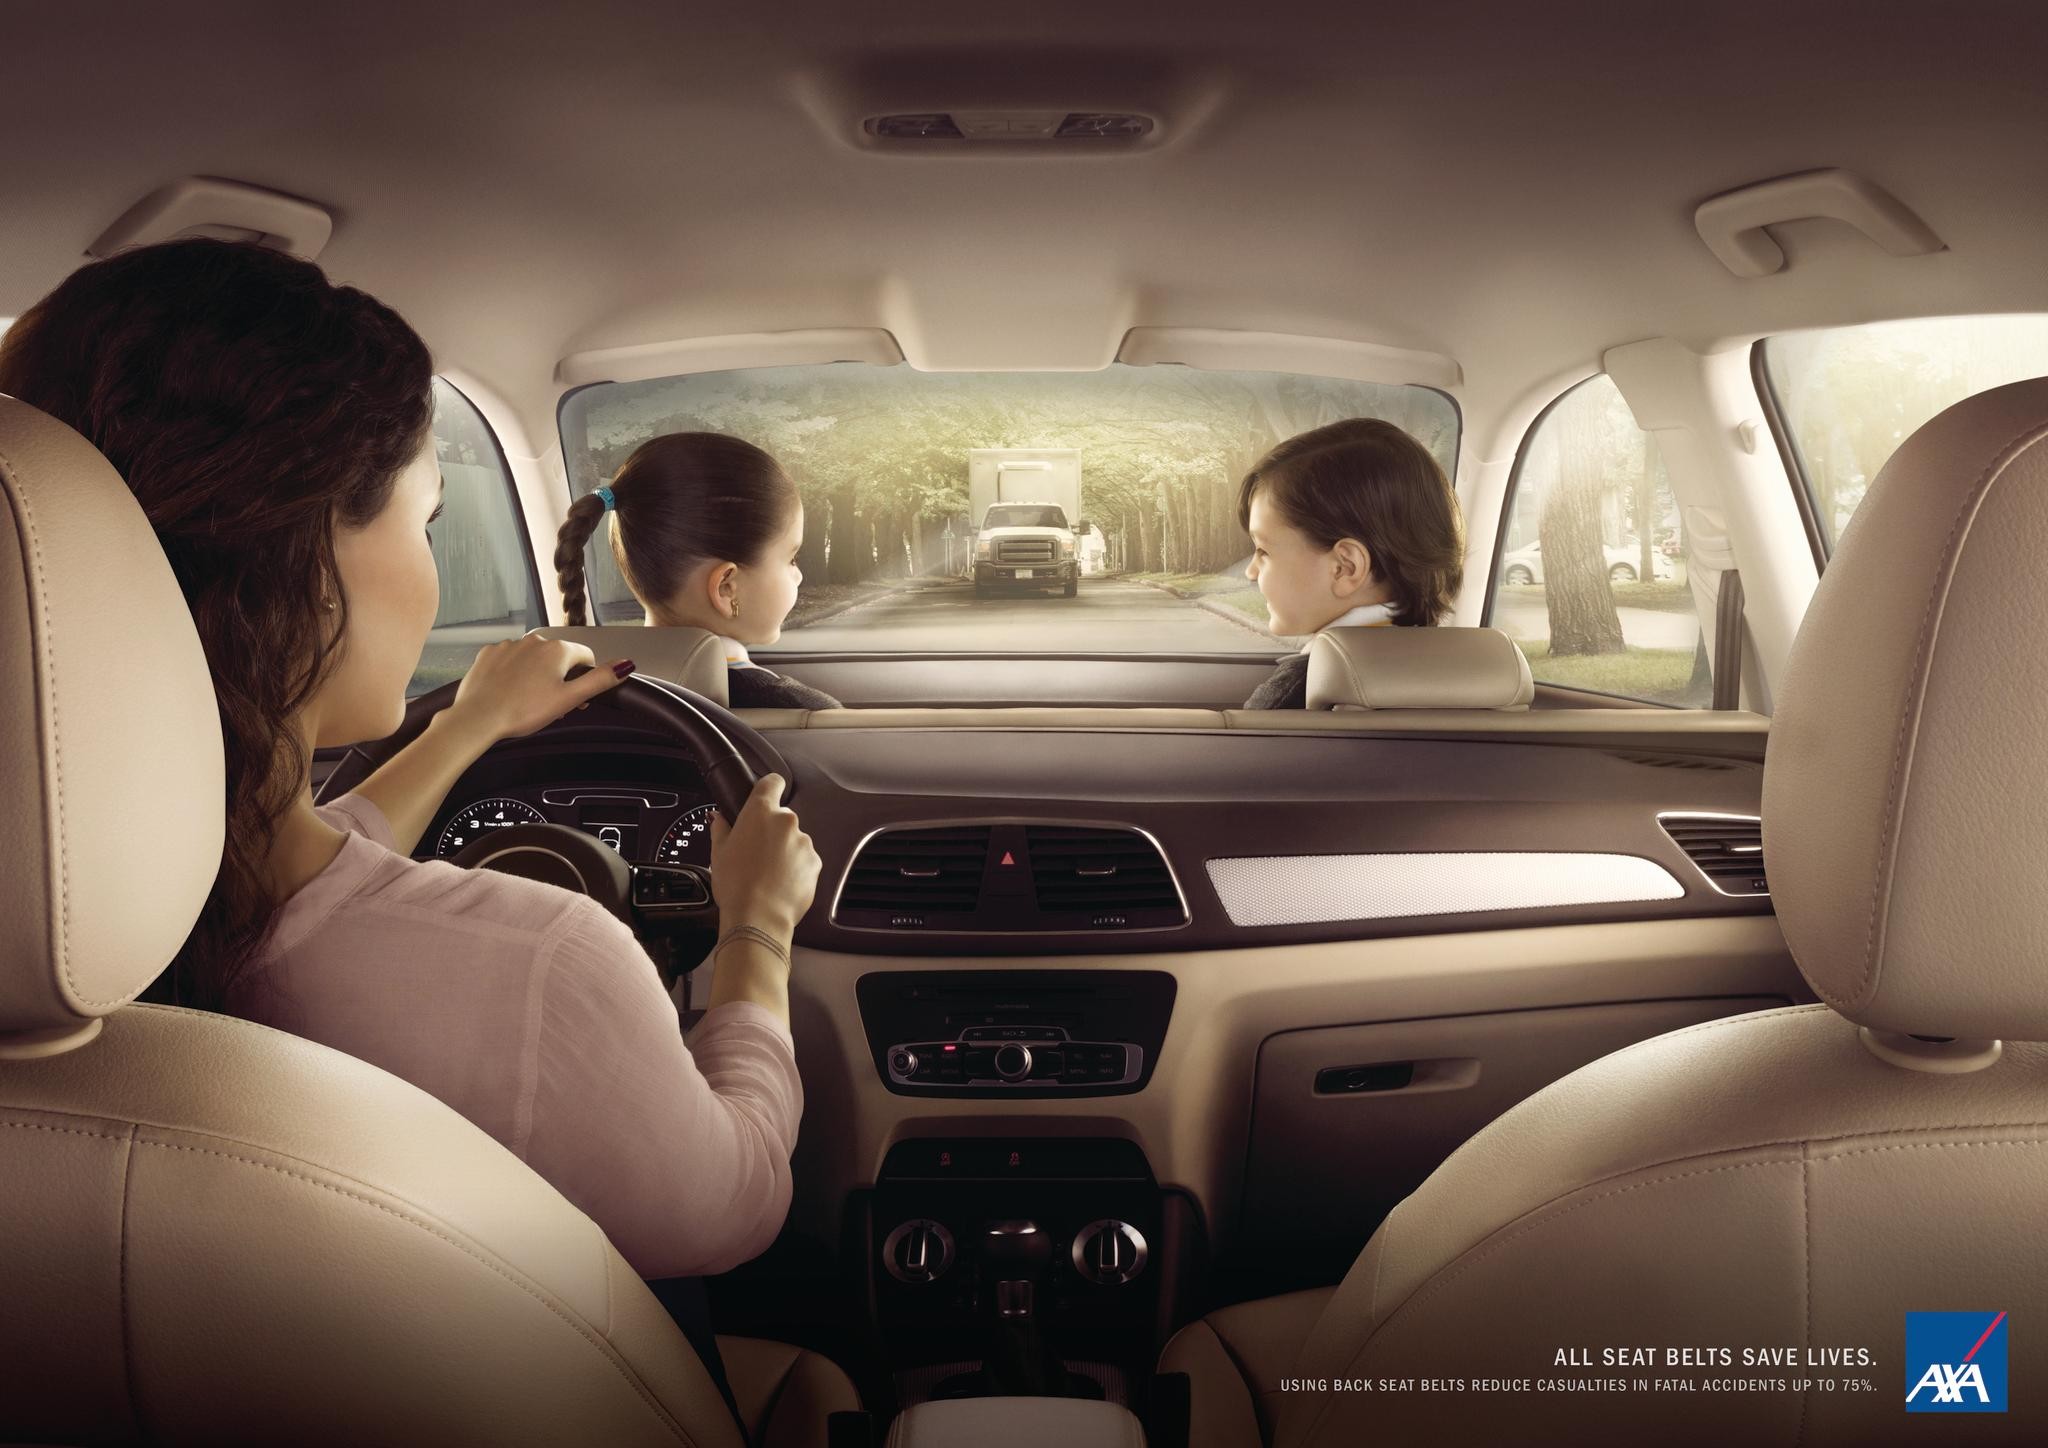 This car is theirs. Автомобильная социальная реклама. Креативная реклама страхования. Insurance ads. Insurance Creative ads.